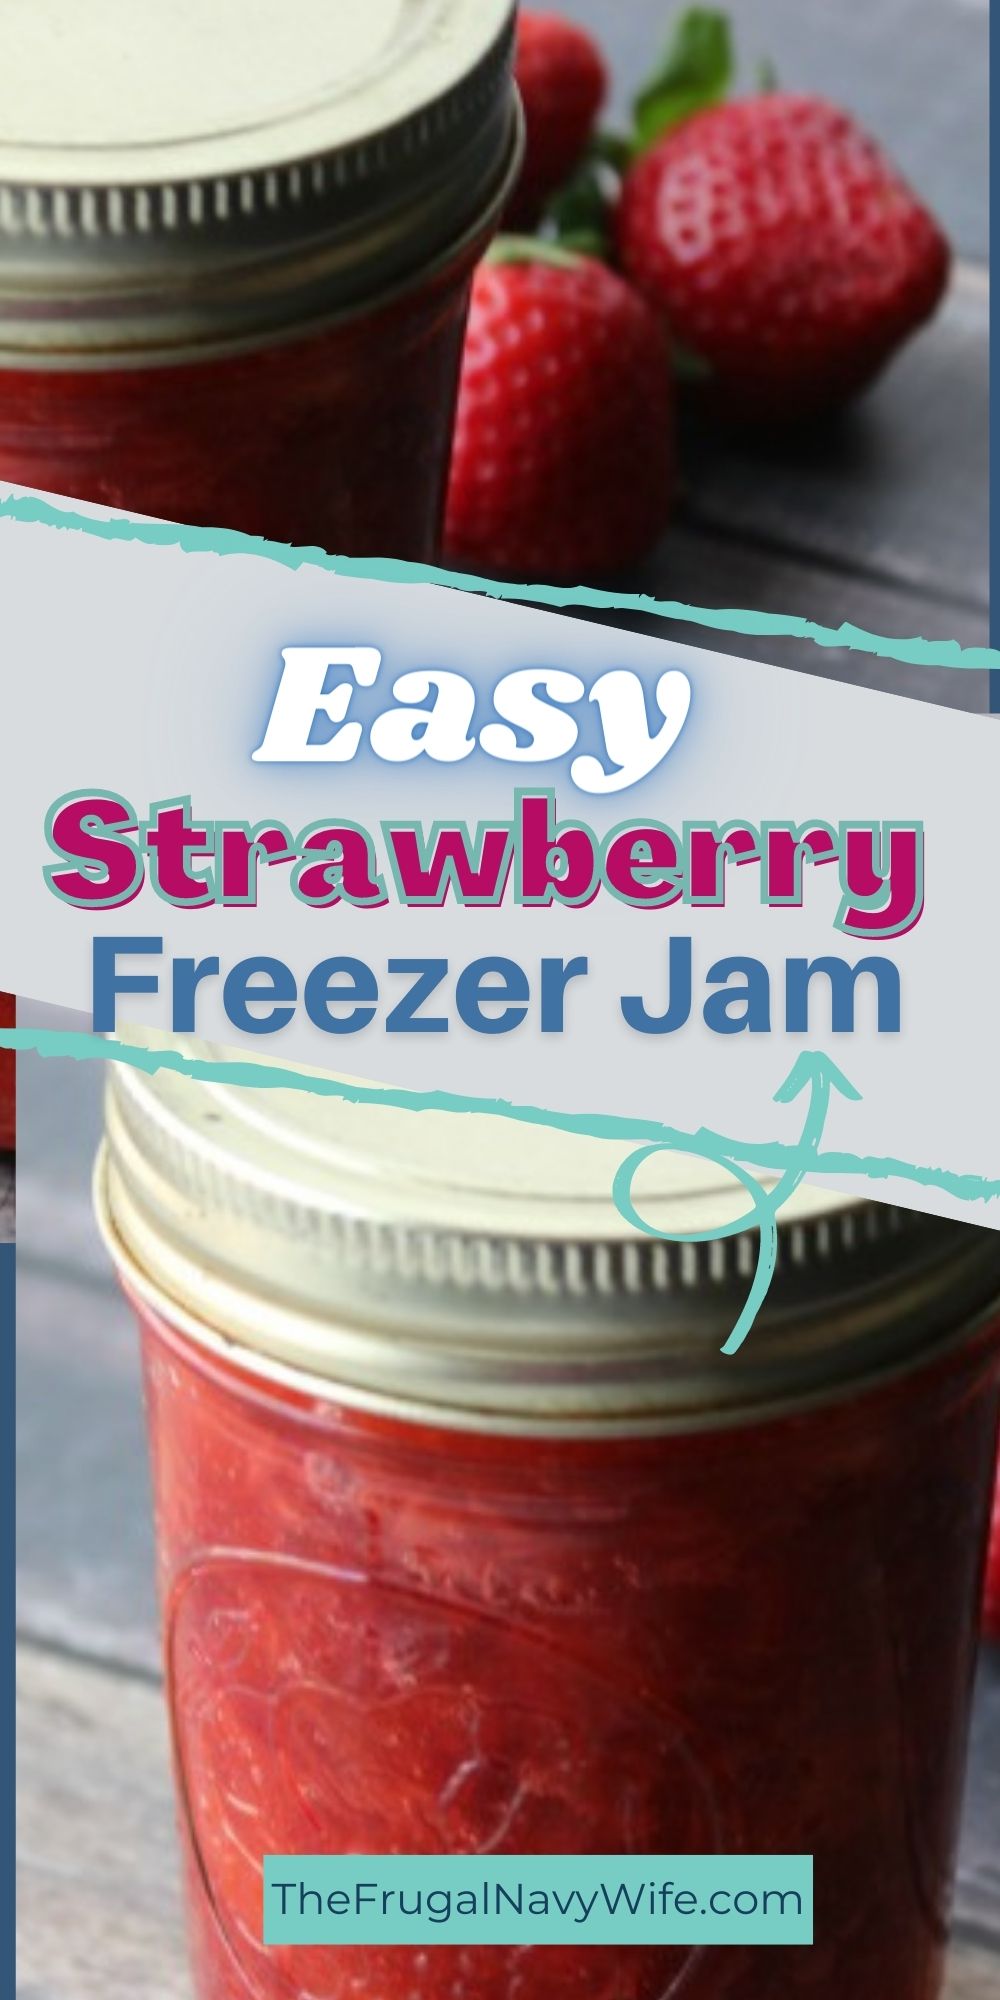 https://www.thefrugalnavywife.com/wp-content/uploads/2016/05/Frugal-Recipe-Easy-Strawberry-Freezer-Jam-Pin.jpg